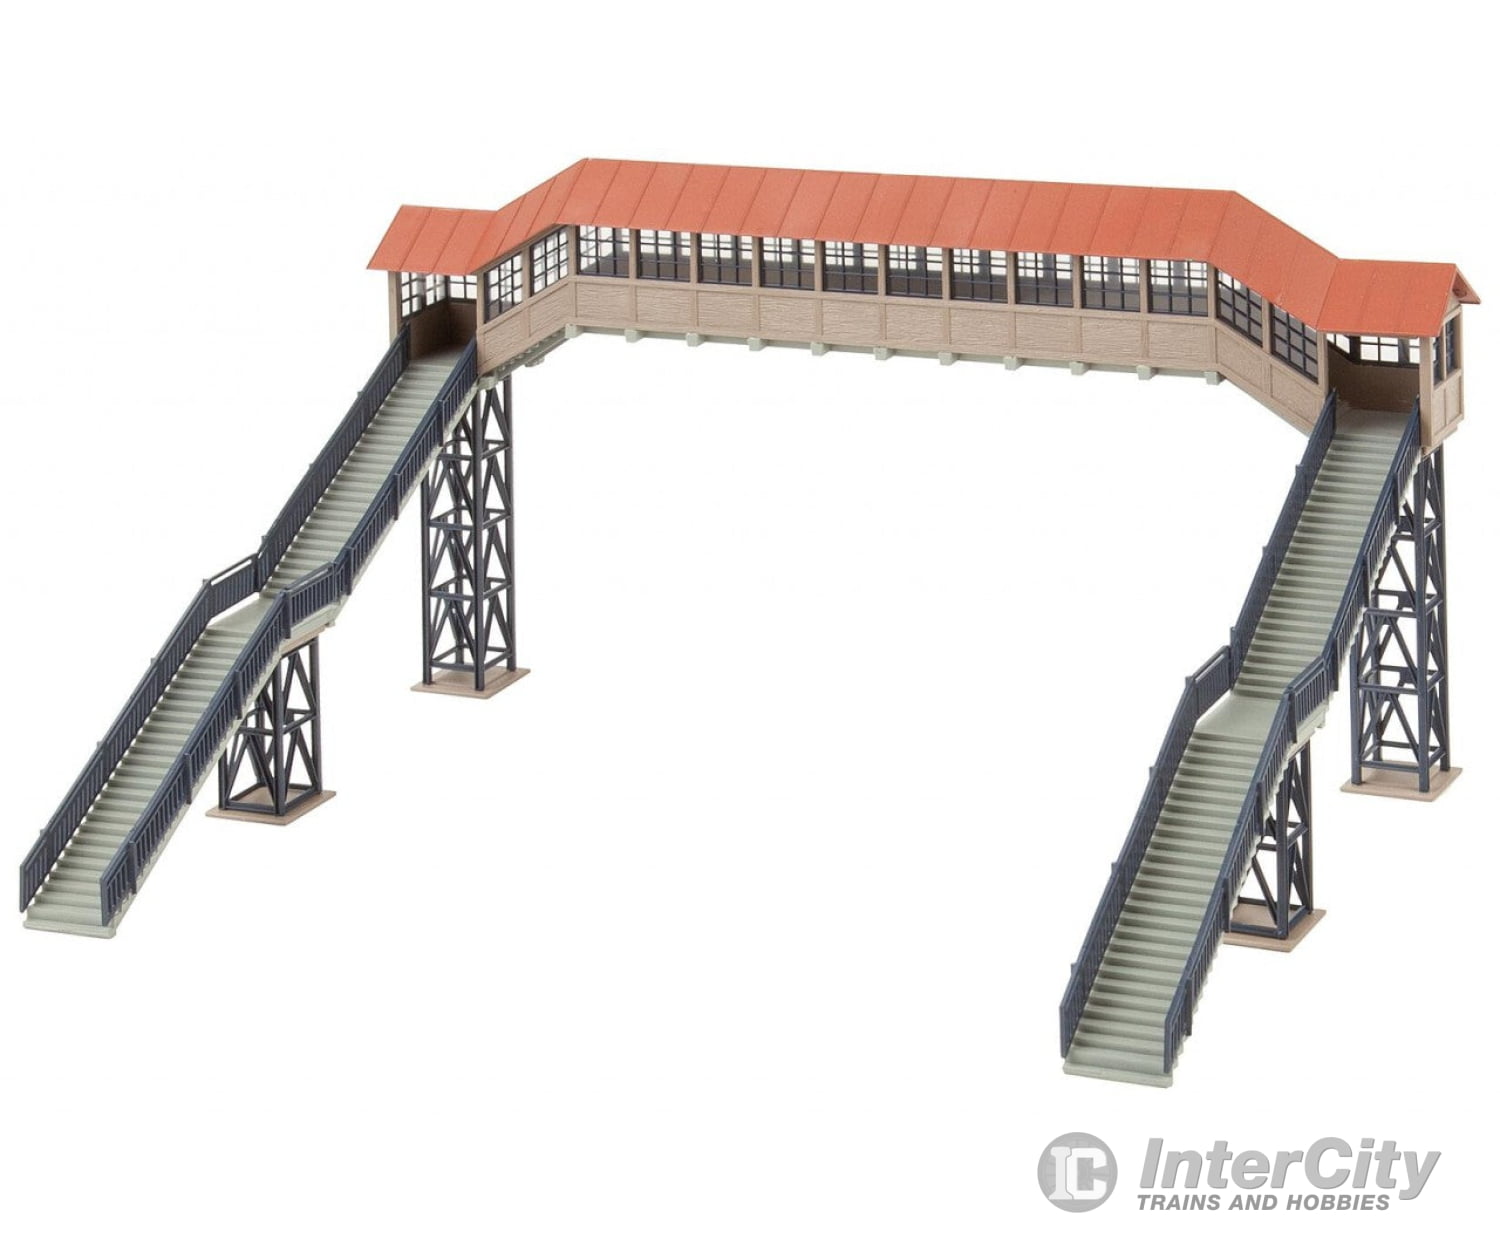 Faller 120109 Ho Covered Footbridge Structures